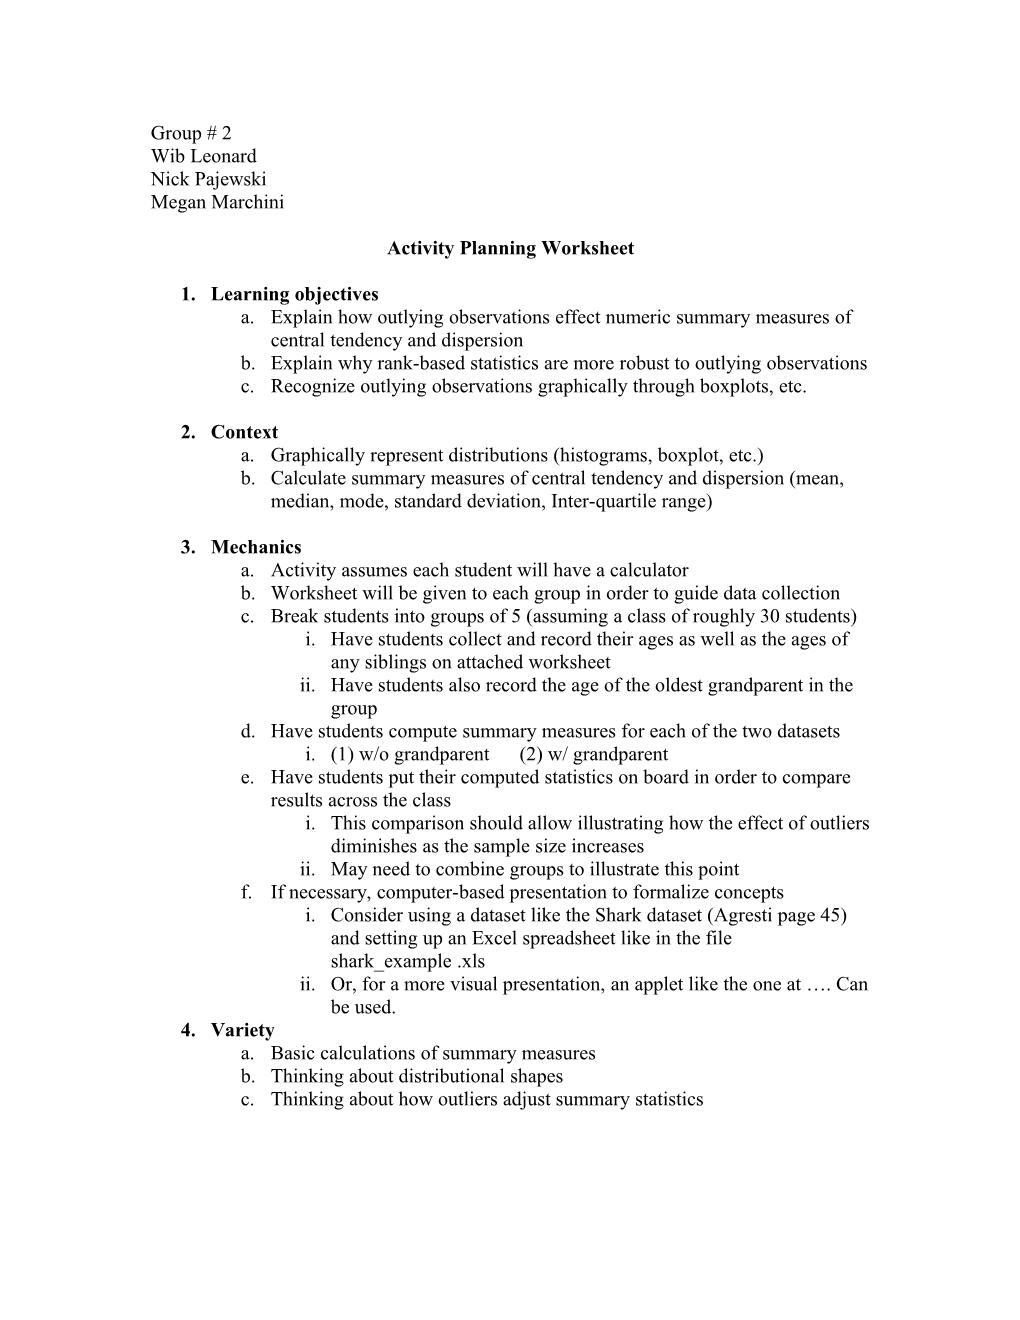 Activity Planning Worksheet